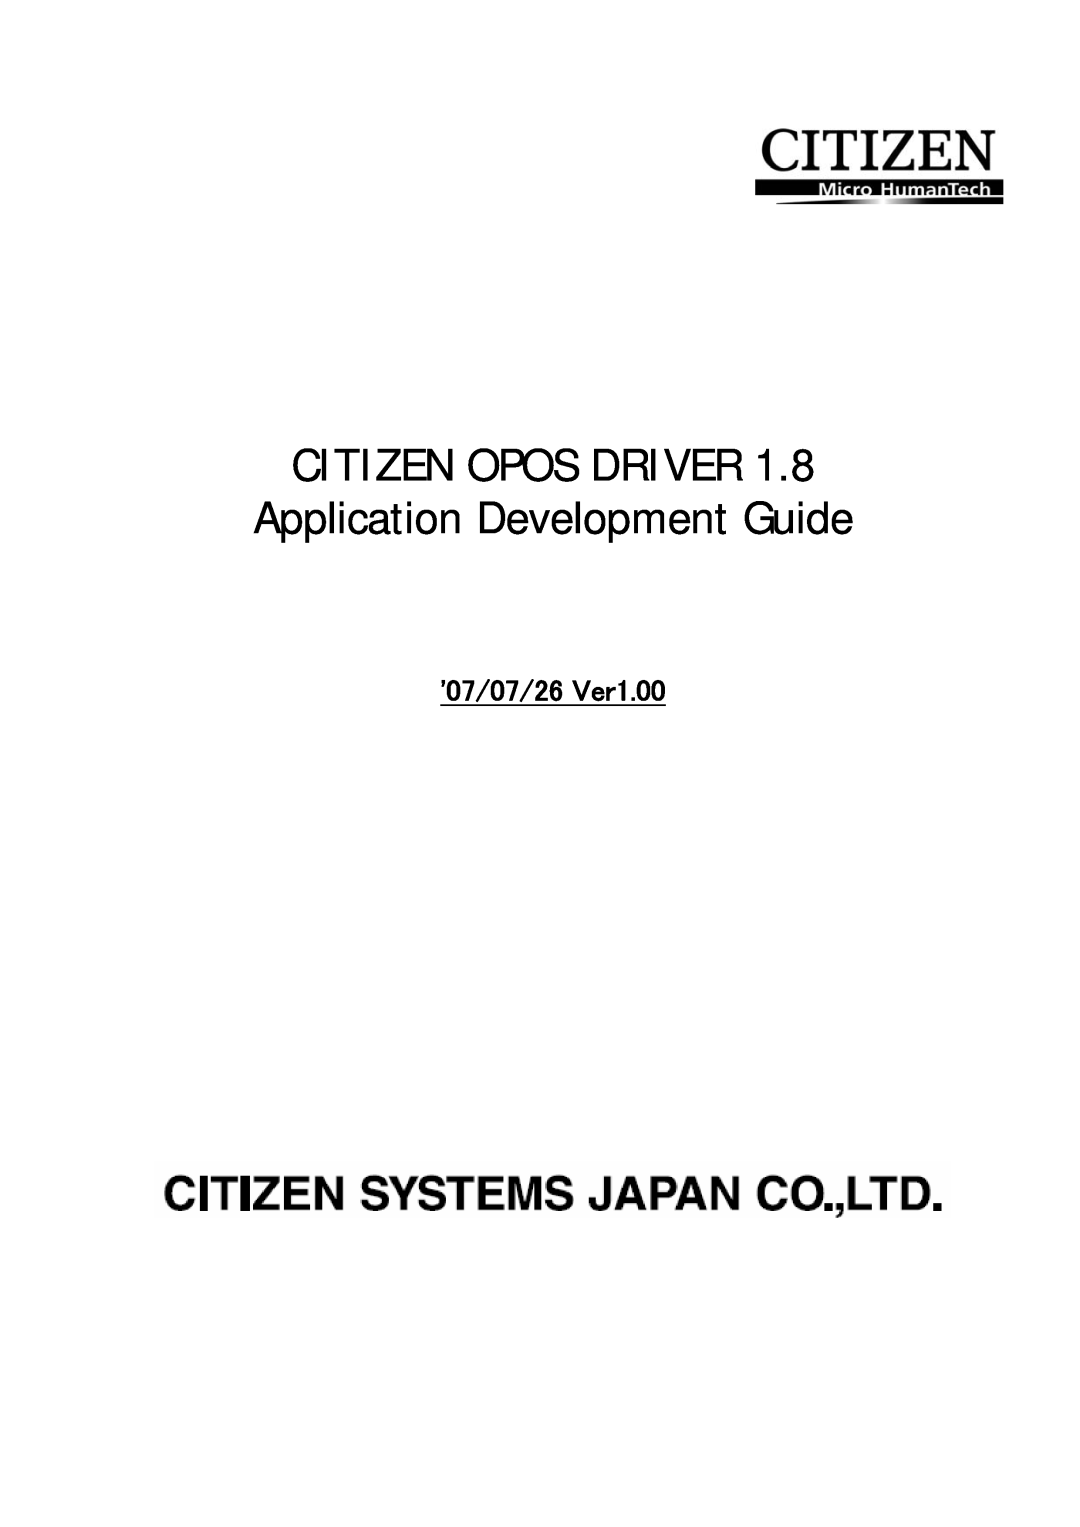 Citizen Systems 1.8 manual CITIZEN OPOS DRIVER Application Development Guide, 07/07/26 Ver1.00 